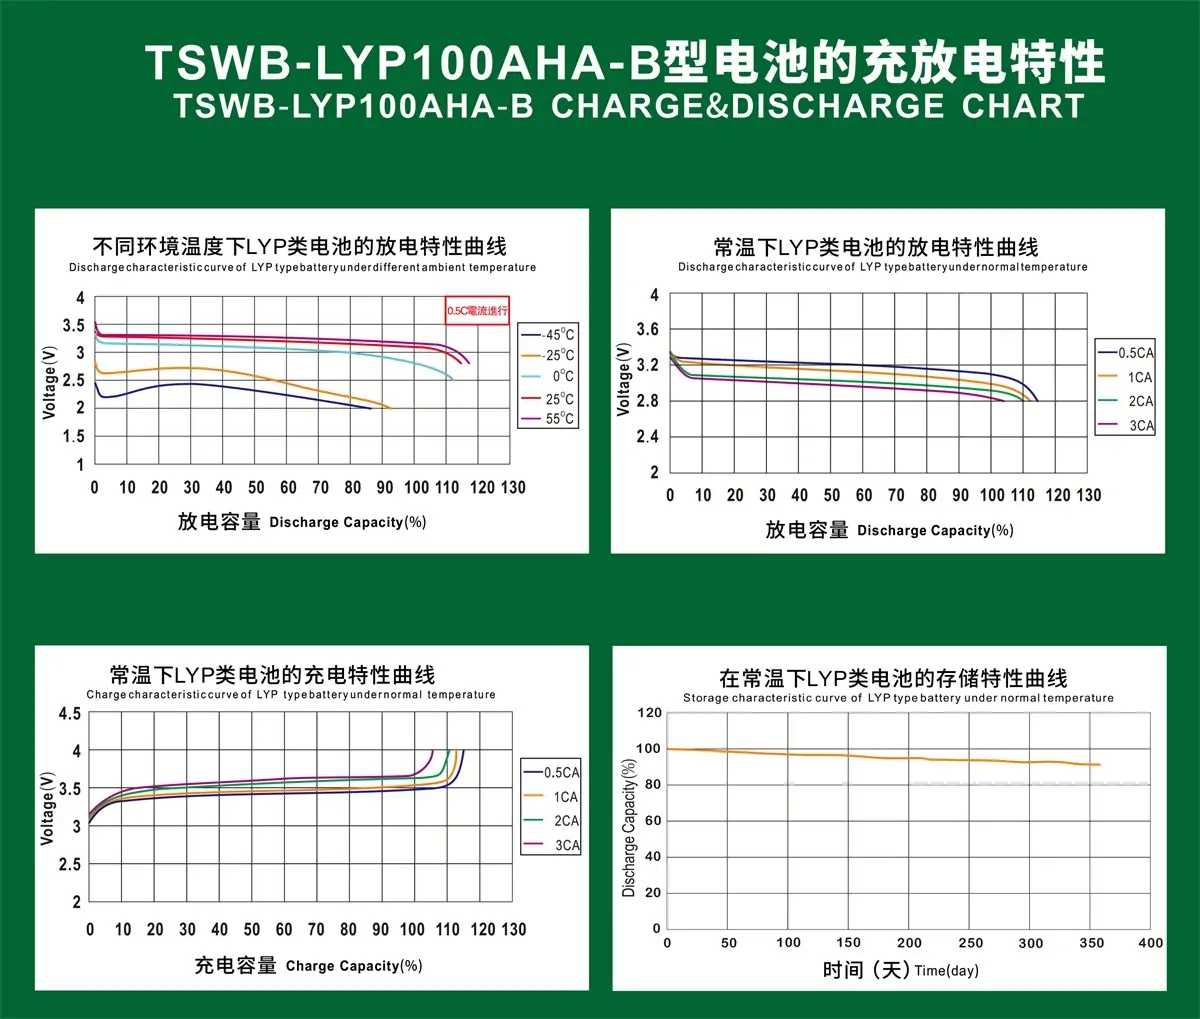 TSWB-LYP100AHA-B CHARGE&DISCHARGE CHART